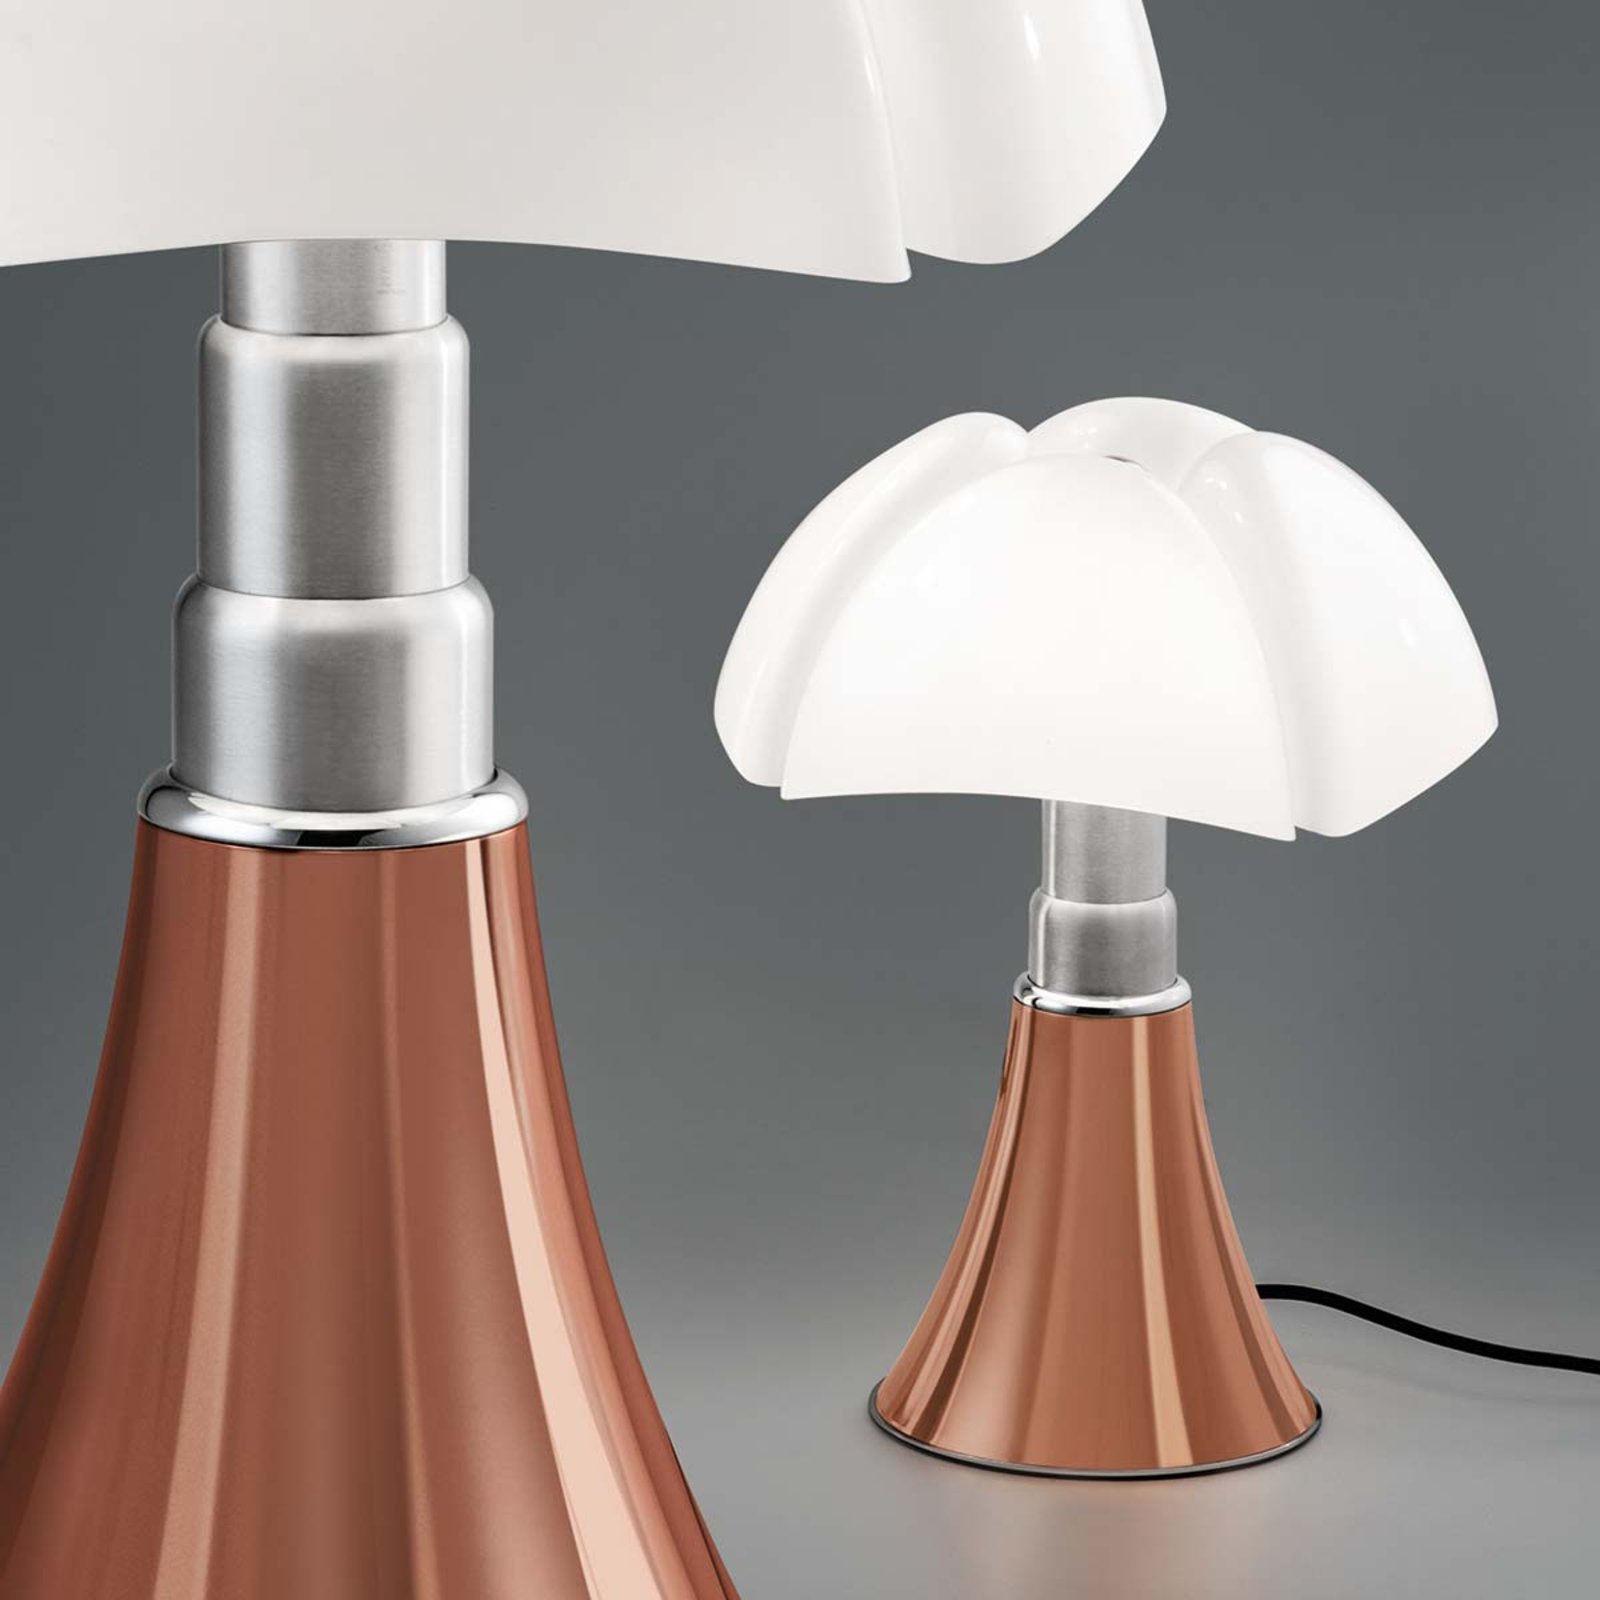 Martinelli Luce Minipipistrello lámpara de mesa de cobre